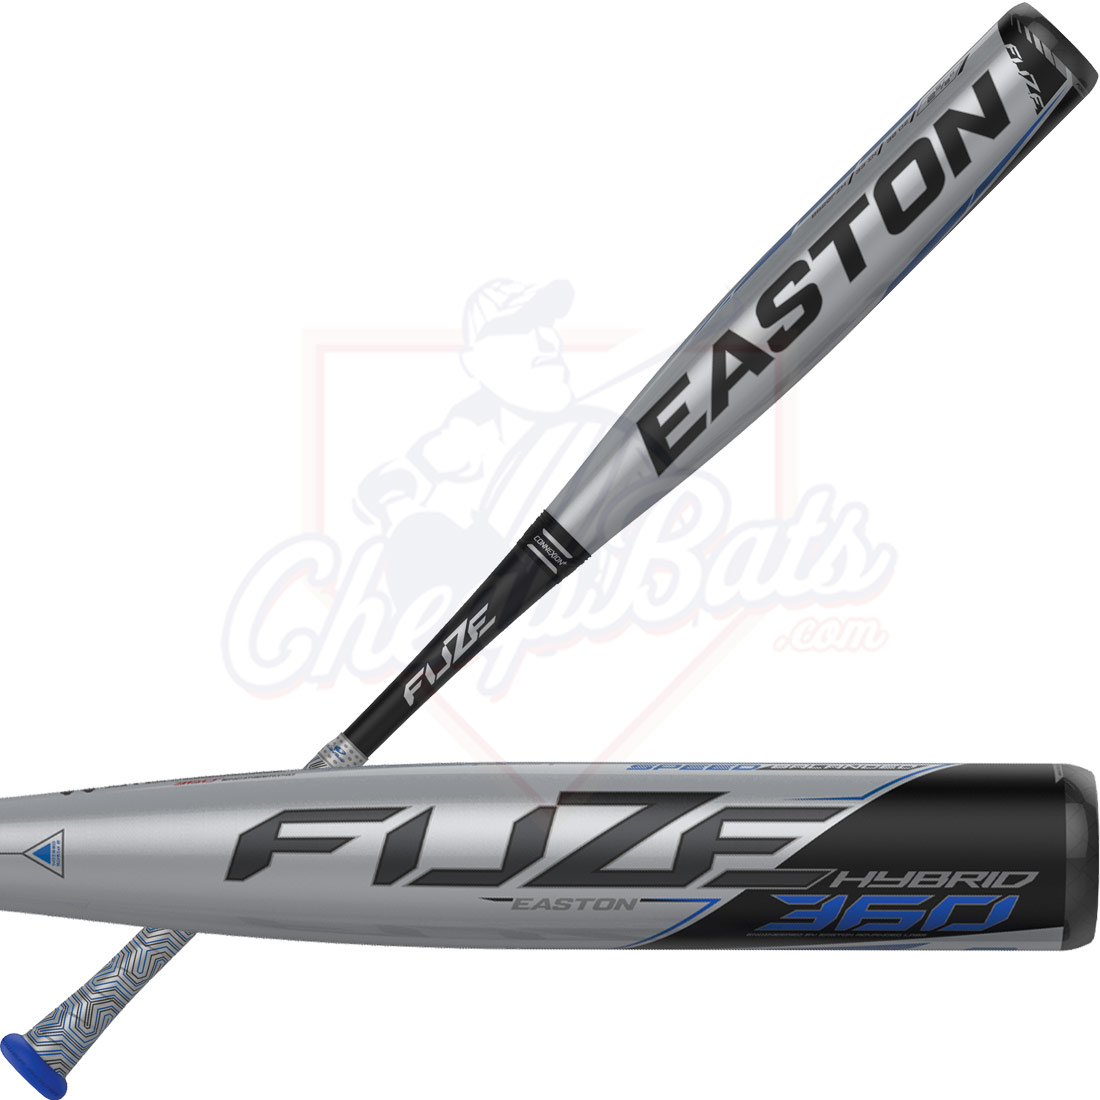 2020 Easton Fuze Hybrid 360 BBCOR Baseball Bat -3oz BB20FZH